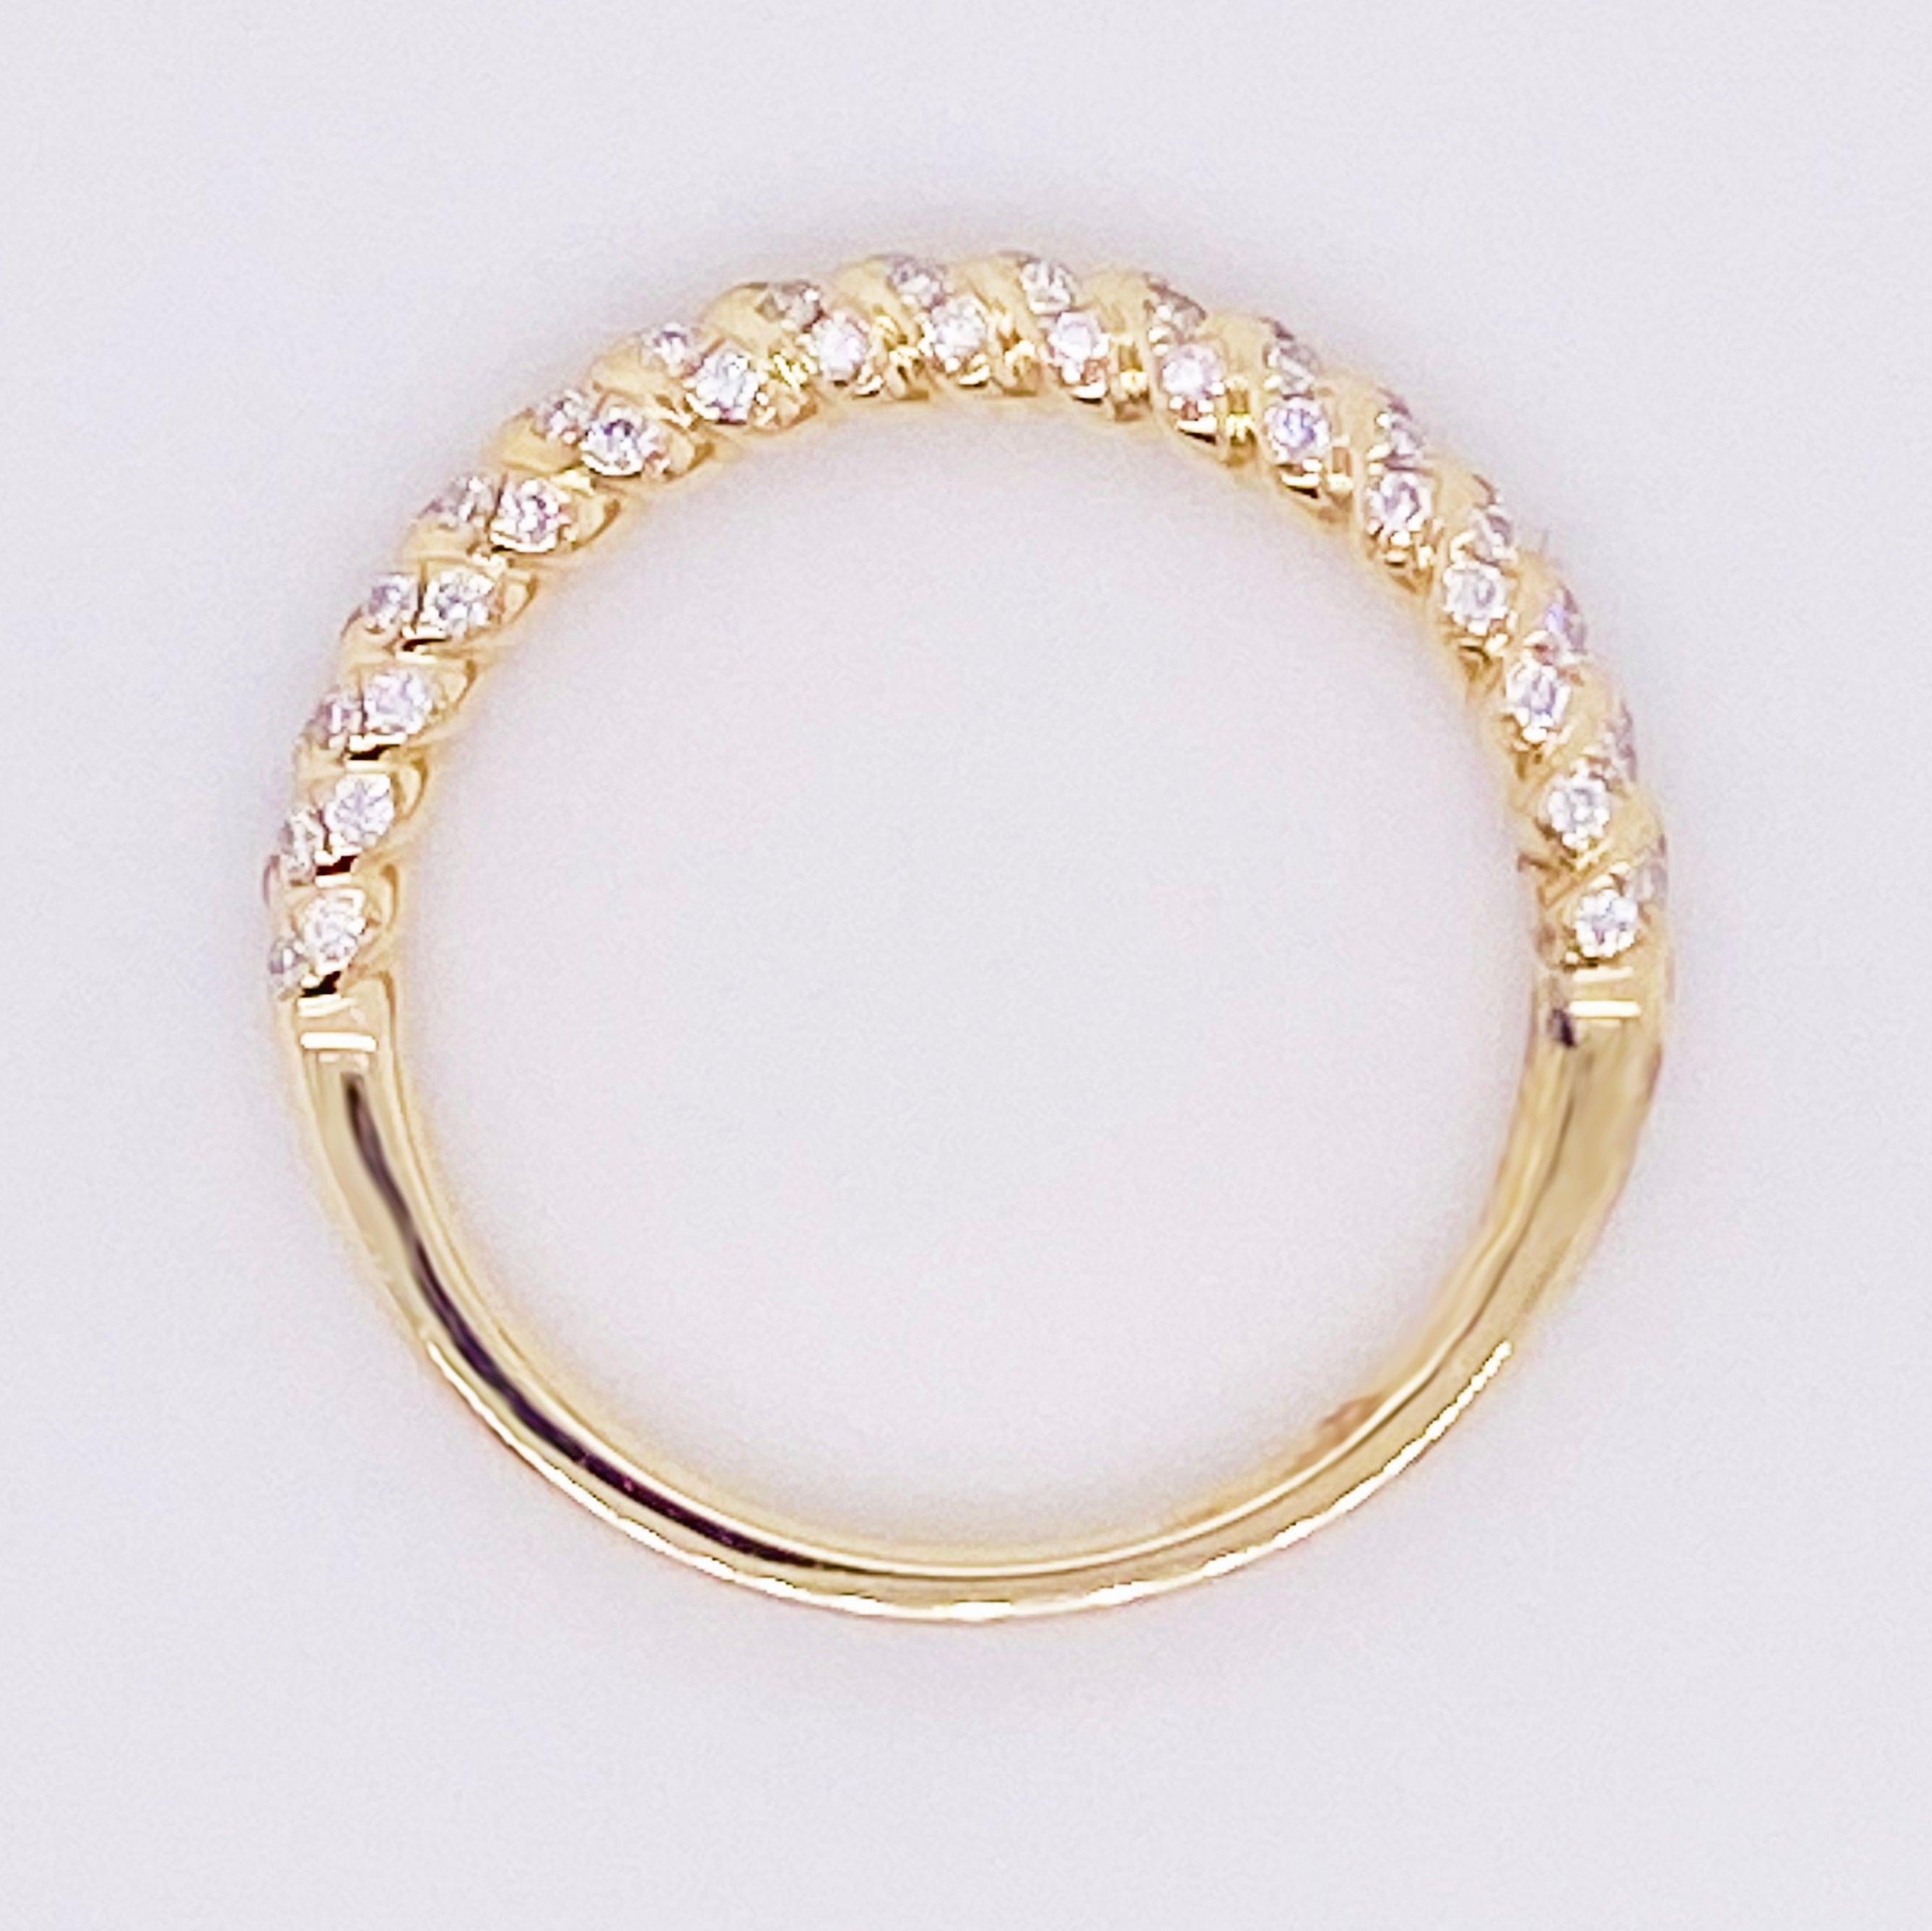 Im Angebot: Verdrehter Diamantring, 14 Karat Gold, Verlobungsring, Verdrehter Ring, stapelbar () 4